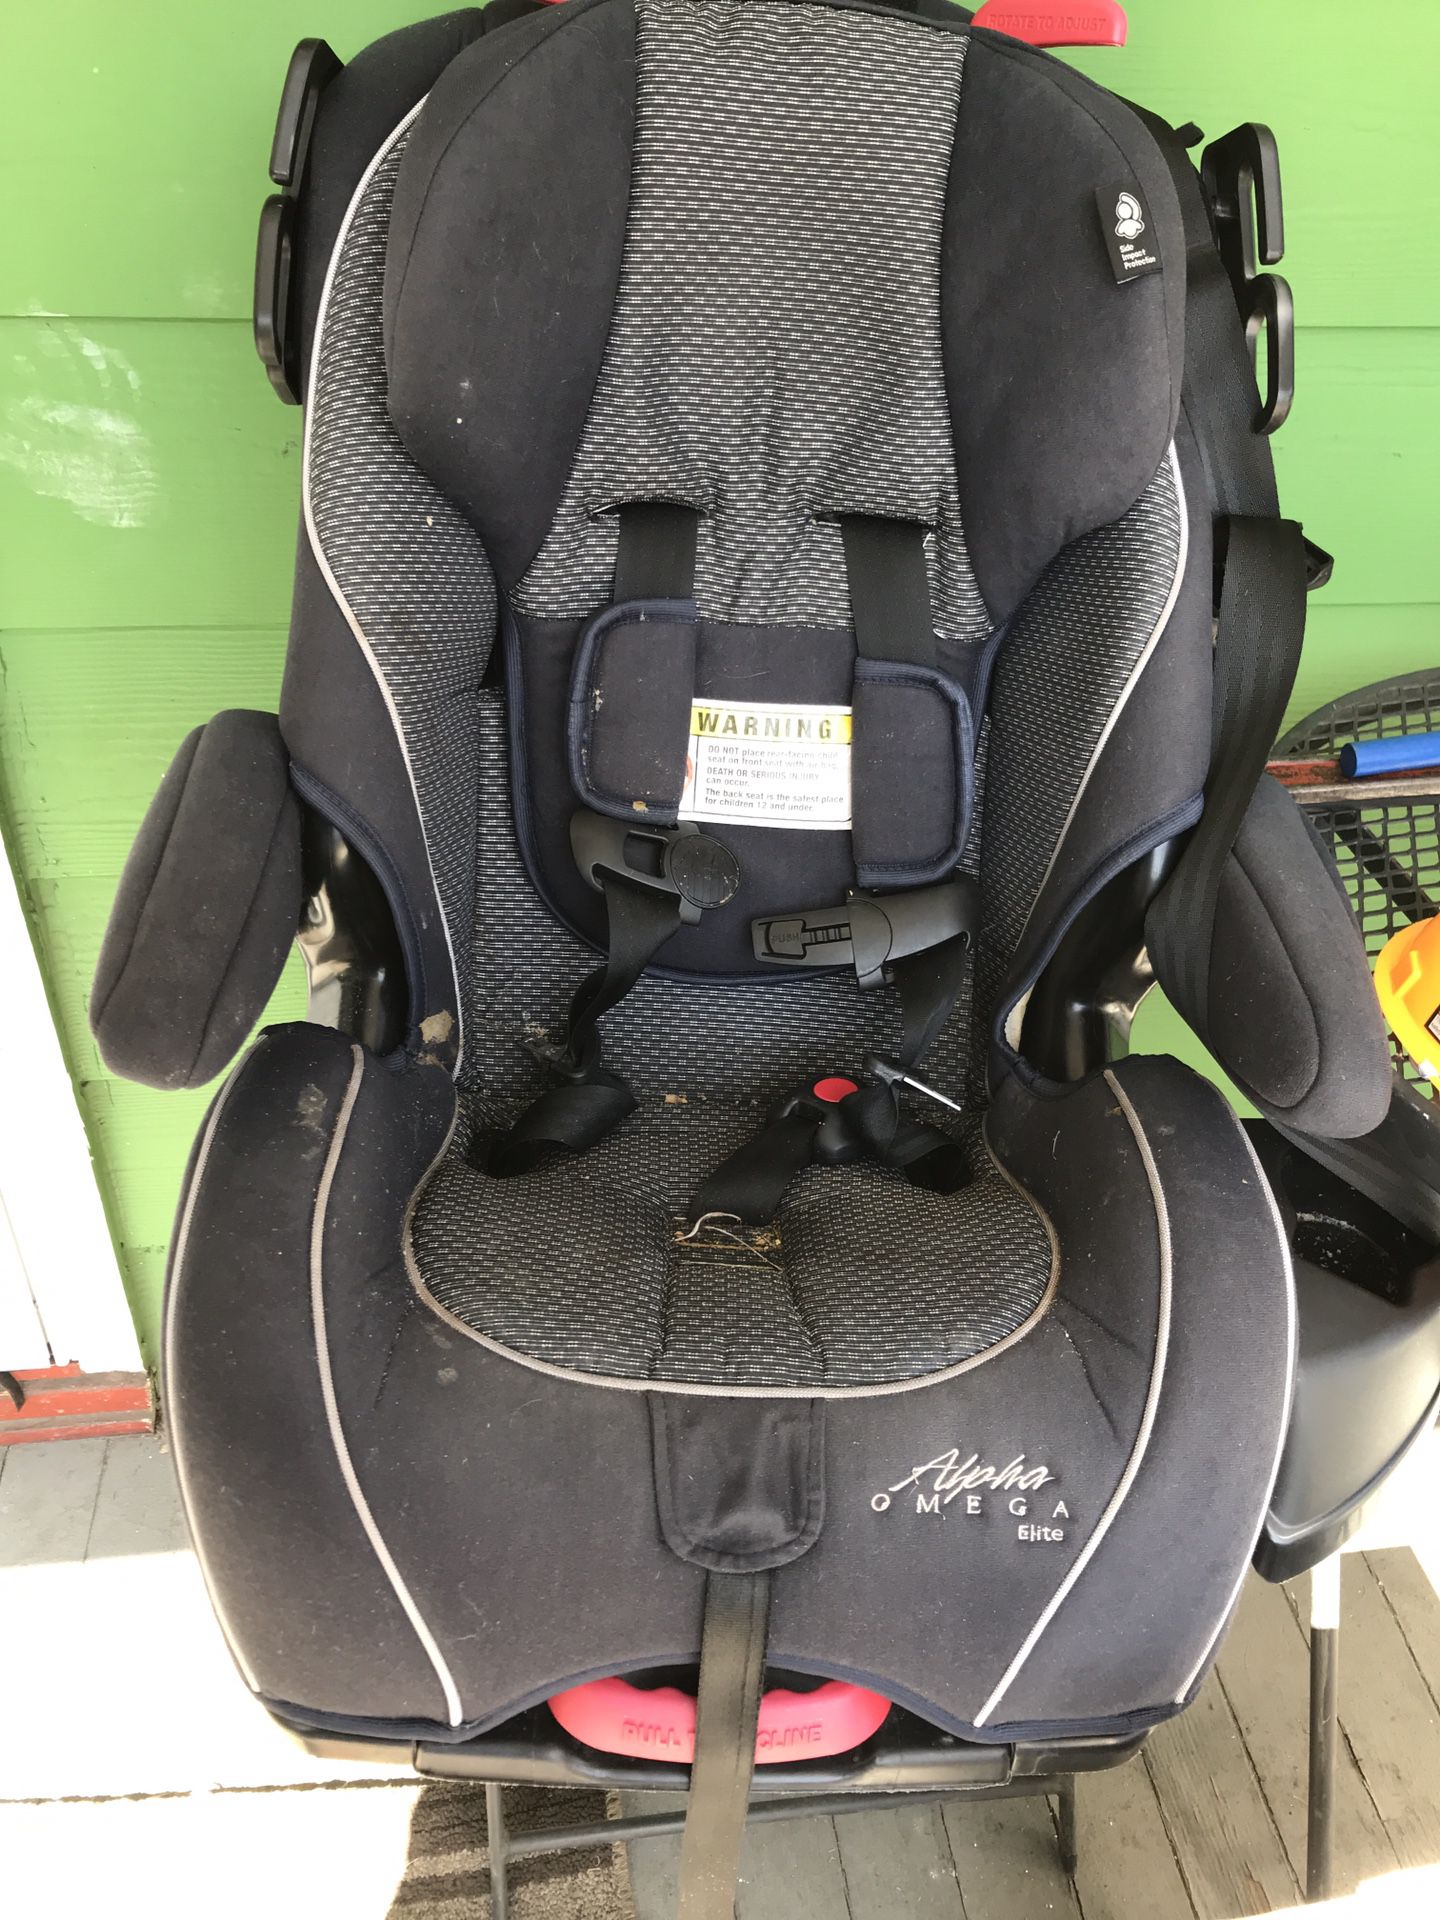 Safety 1st, Alpha omega elite convertible car seat